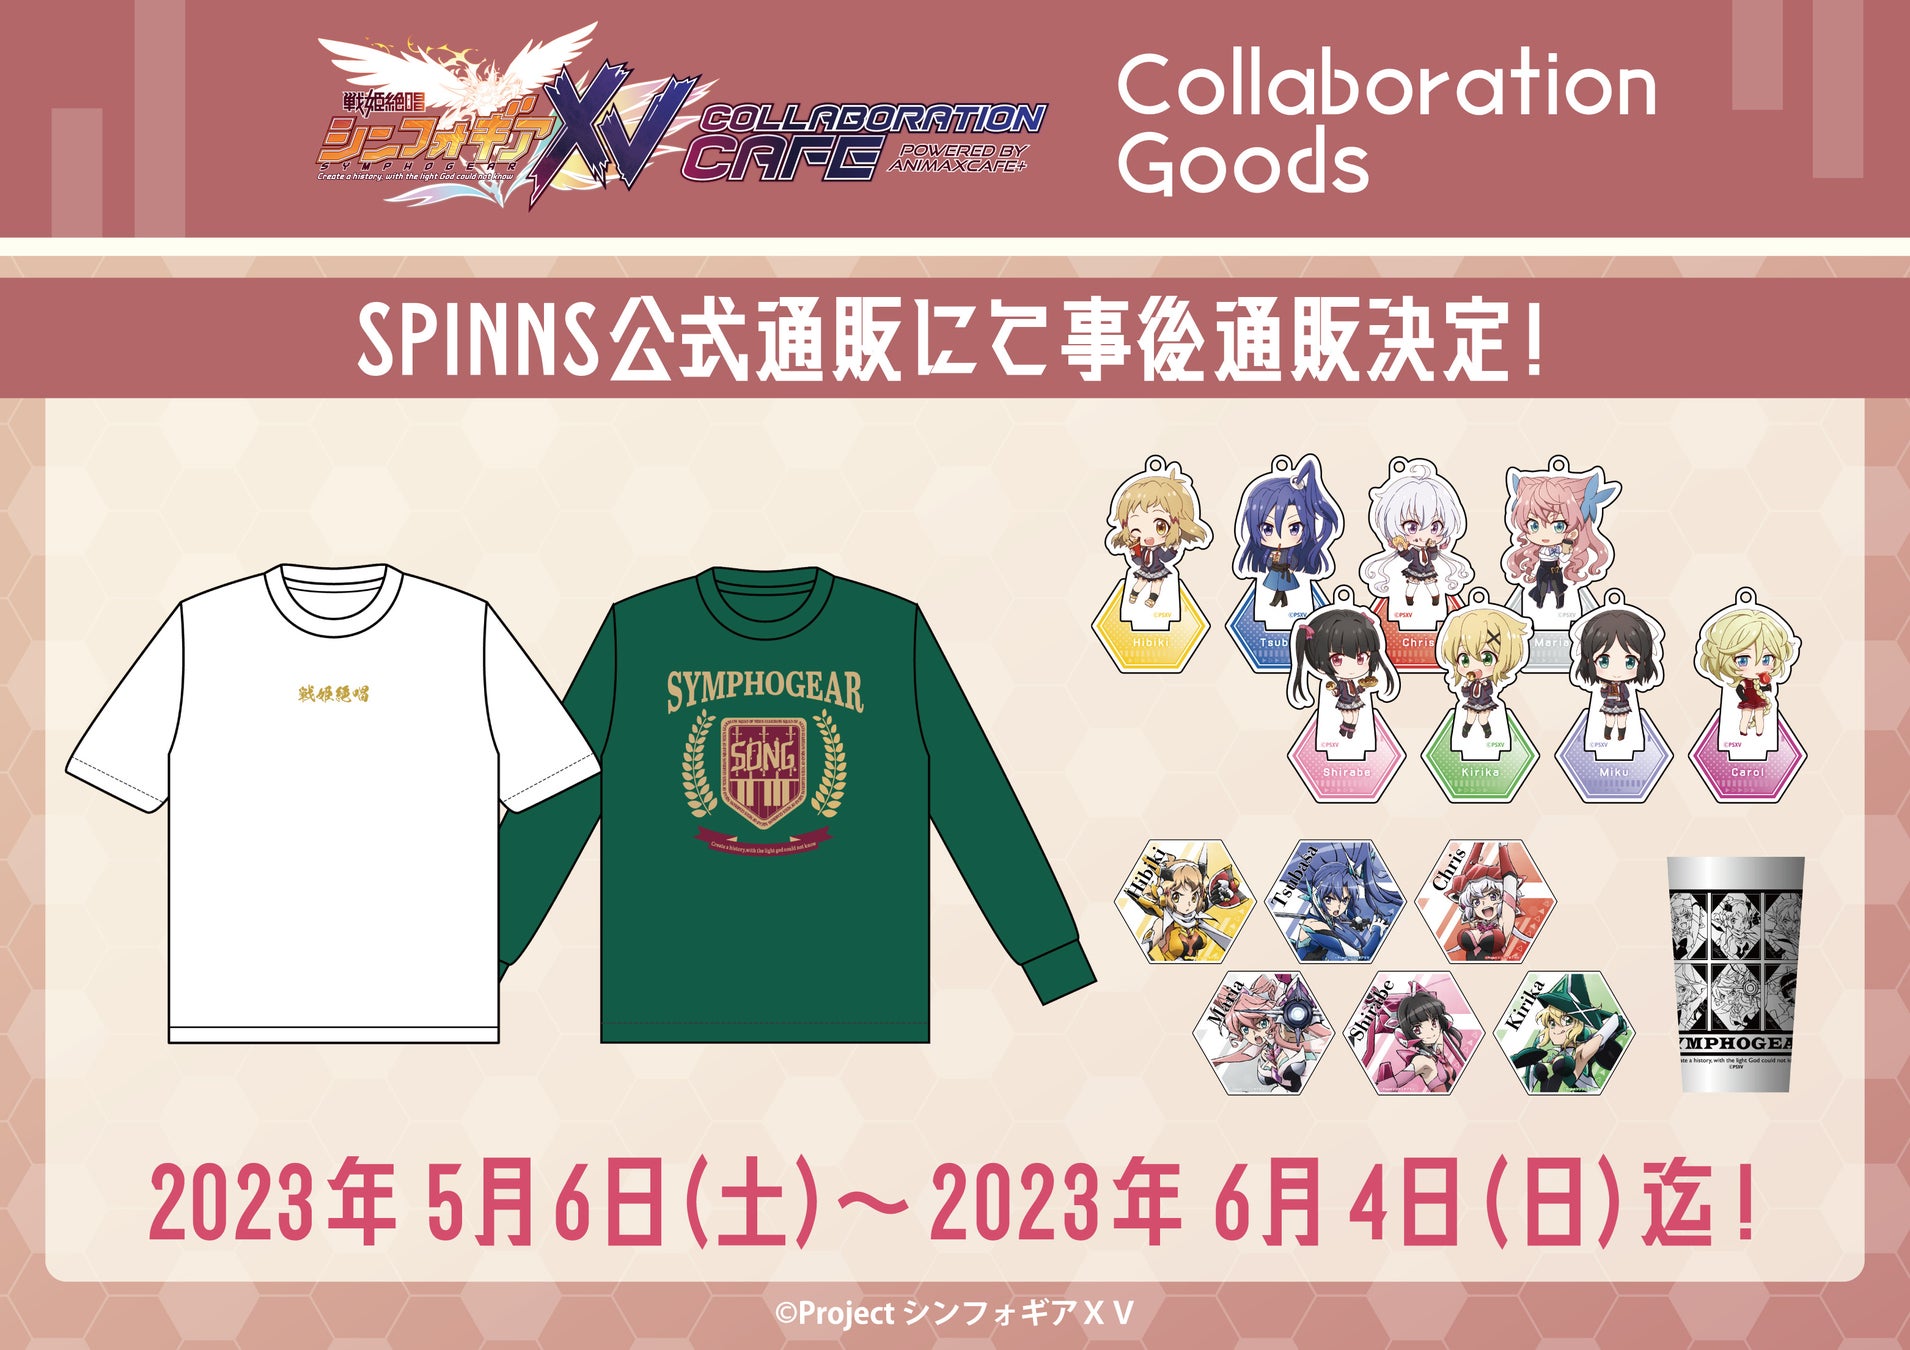 TVアニメ『戦姫絶唱シンフォギアＸＶ』のコラボカフェ限定グッズをSPINNS公式通販で販売決定！